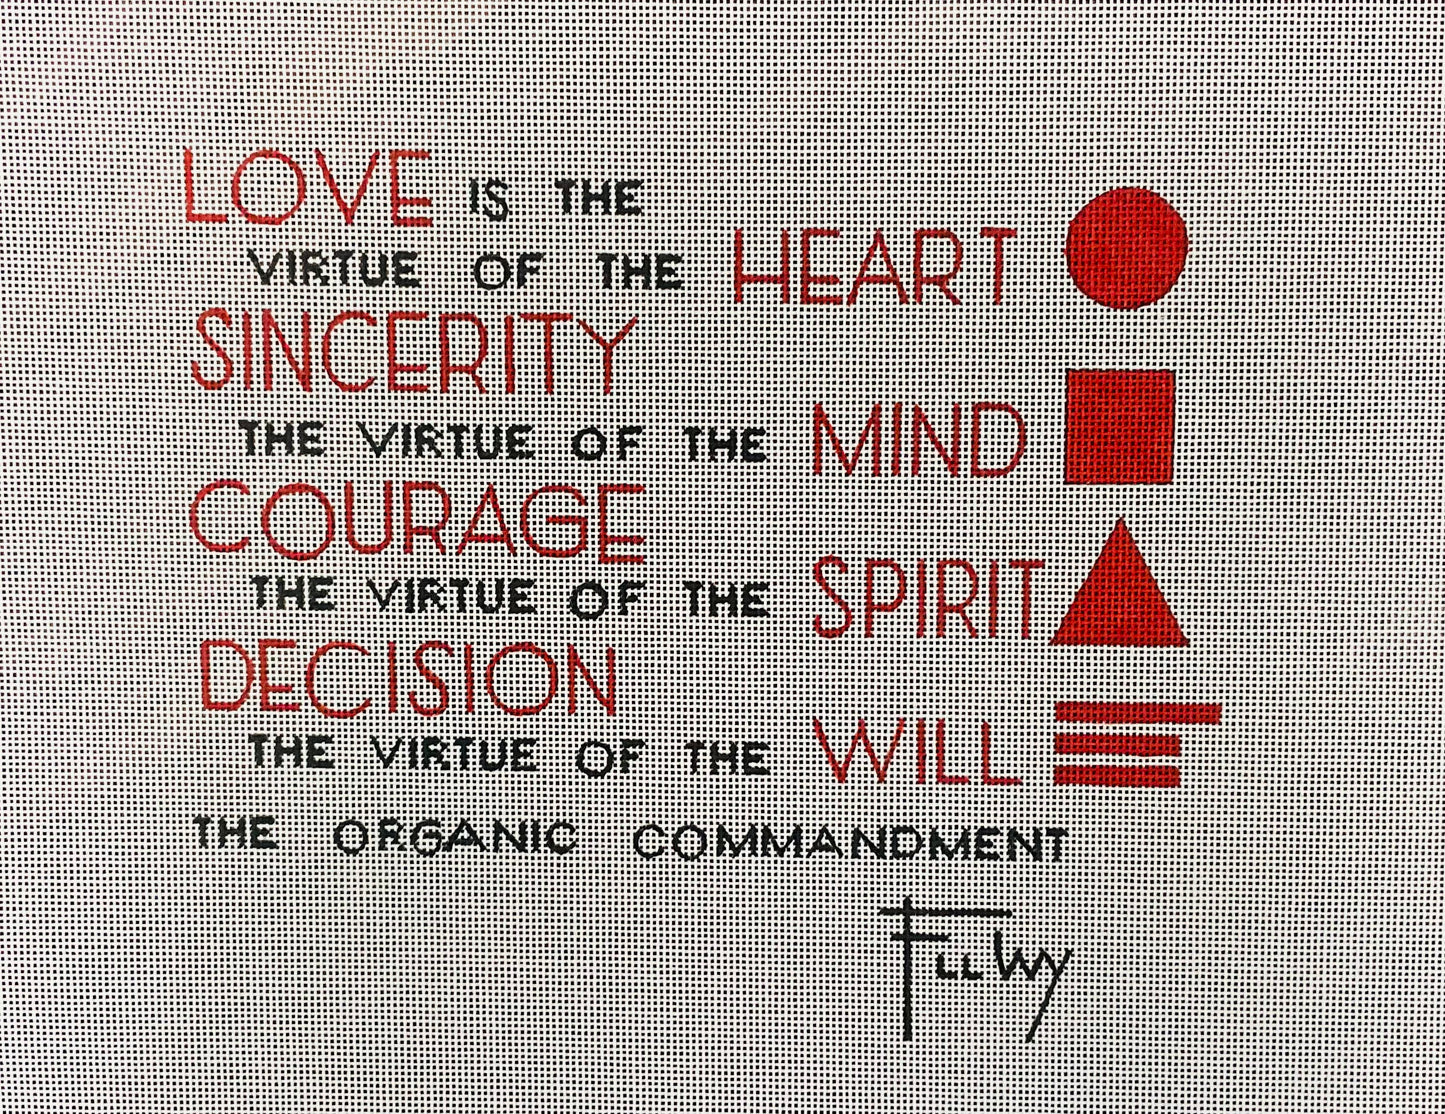 Frank Lloyd Wright Organic Commandment